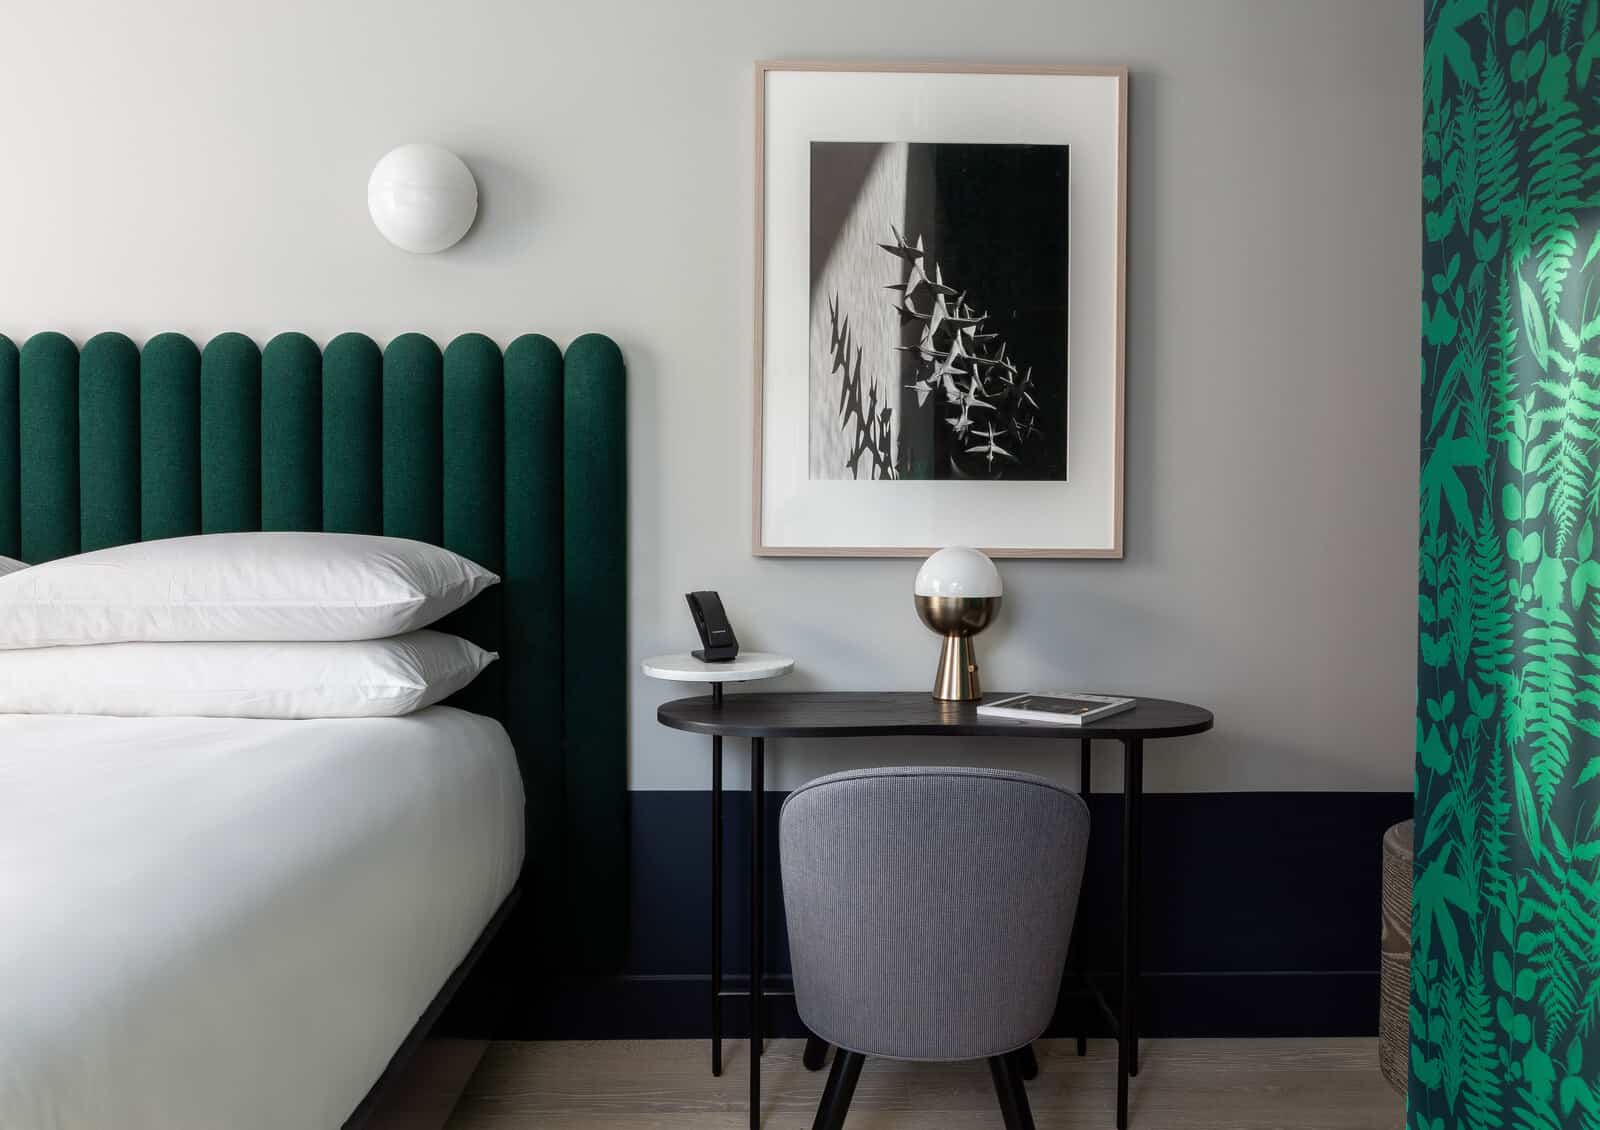 Patricia Urquiola designs Milan outpost for Room Mate Hotels chain  Room  mate hotel, Bedroom design inspiration, Hotel interior design